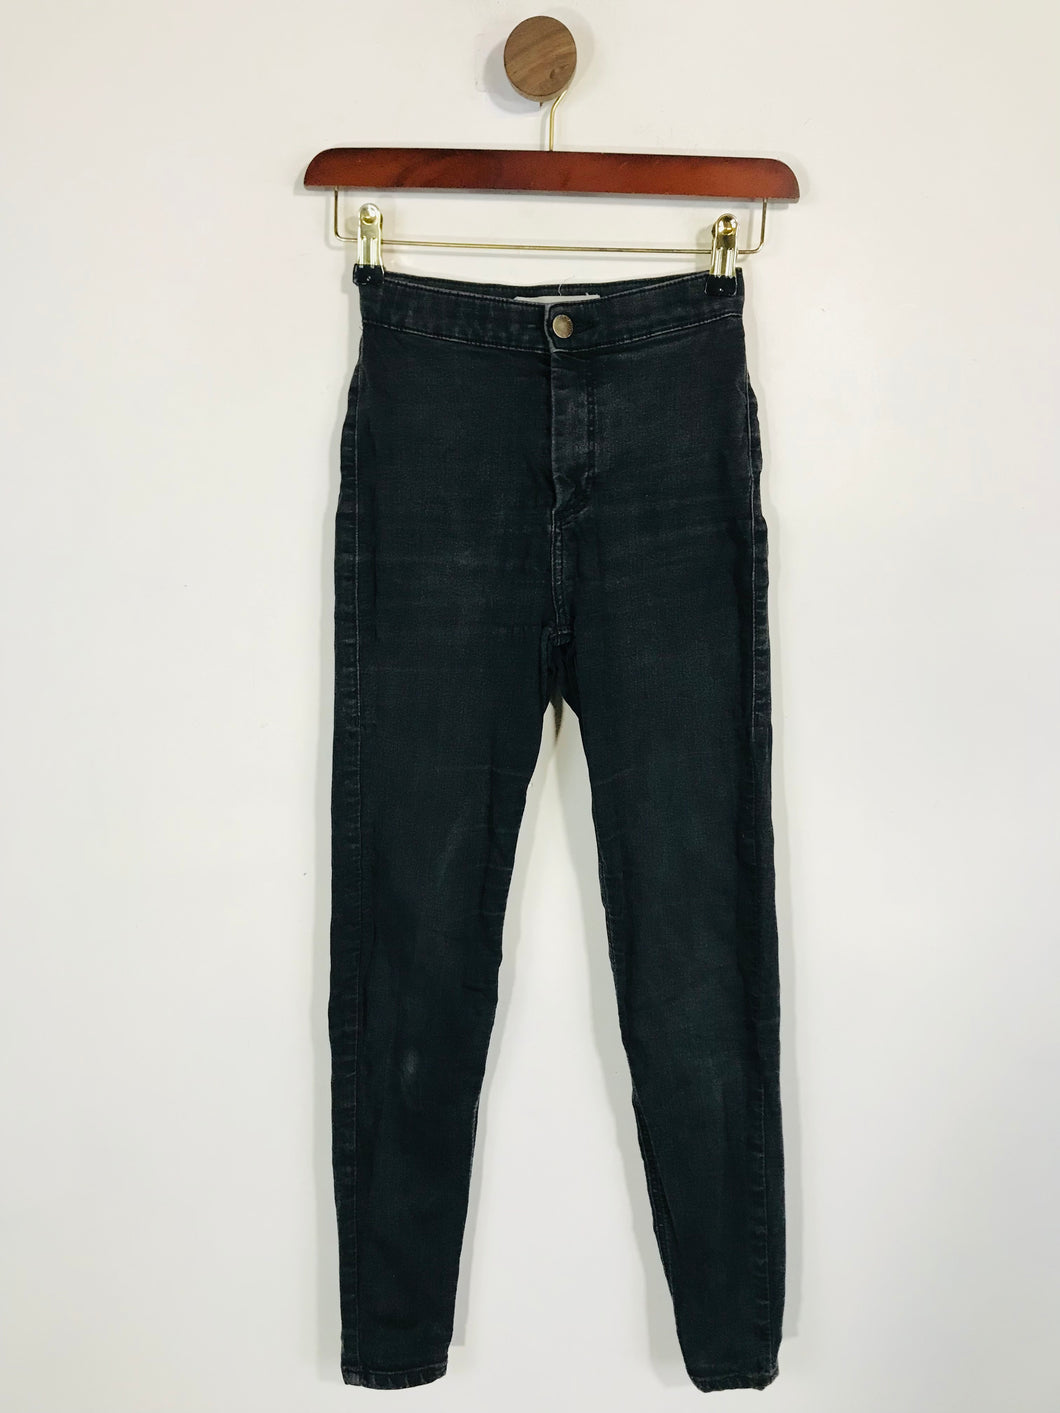 Topshop Women's Skinny Jeans | W25 L28 | Black